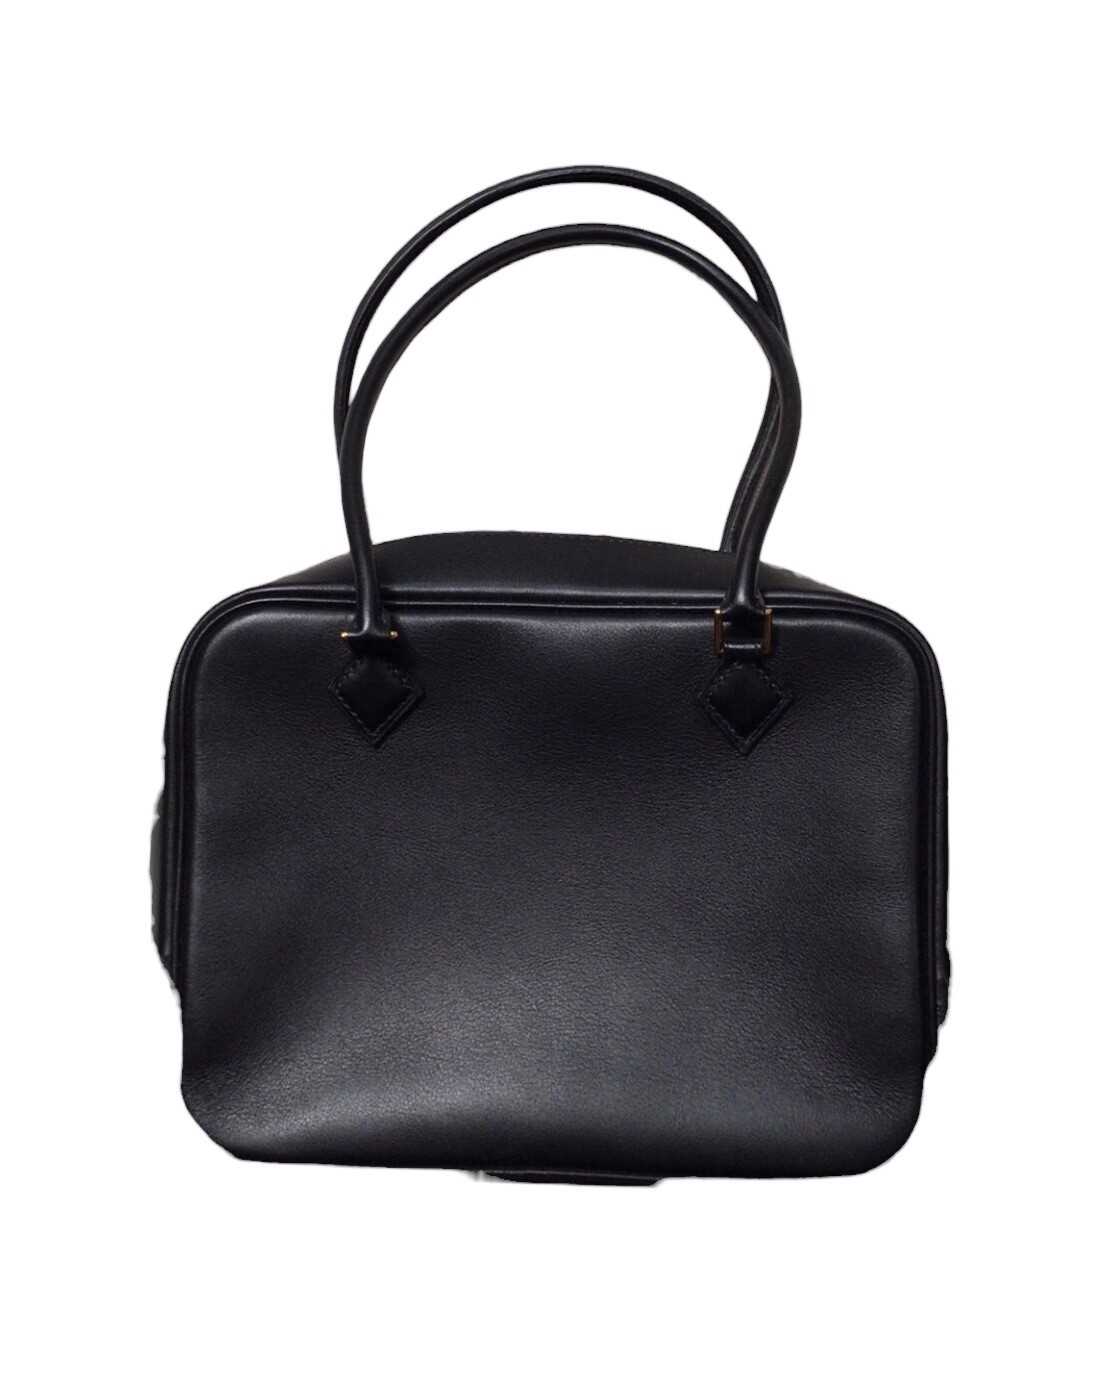 Lot 2125 - Hermès Plume handbag in black leather with